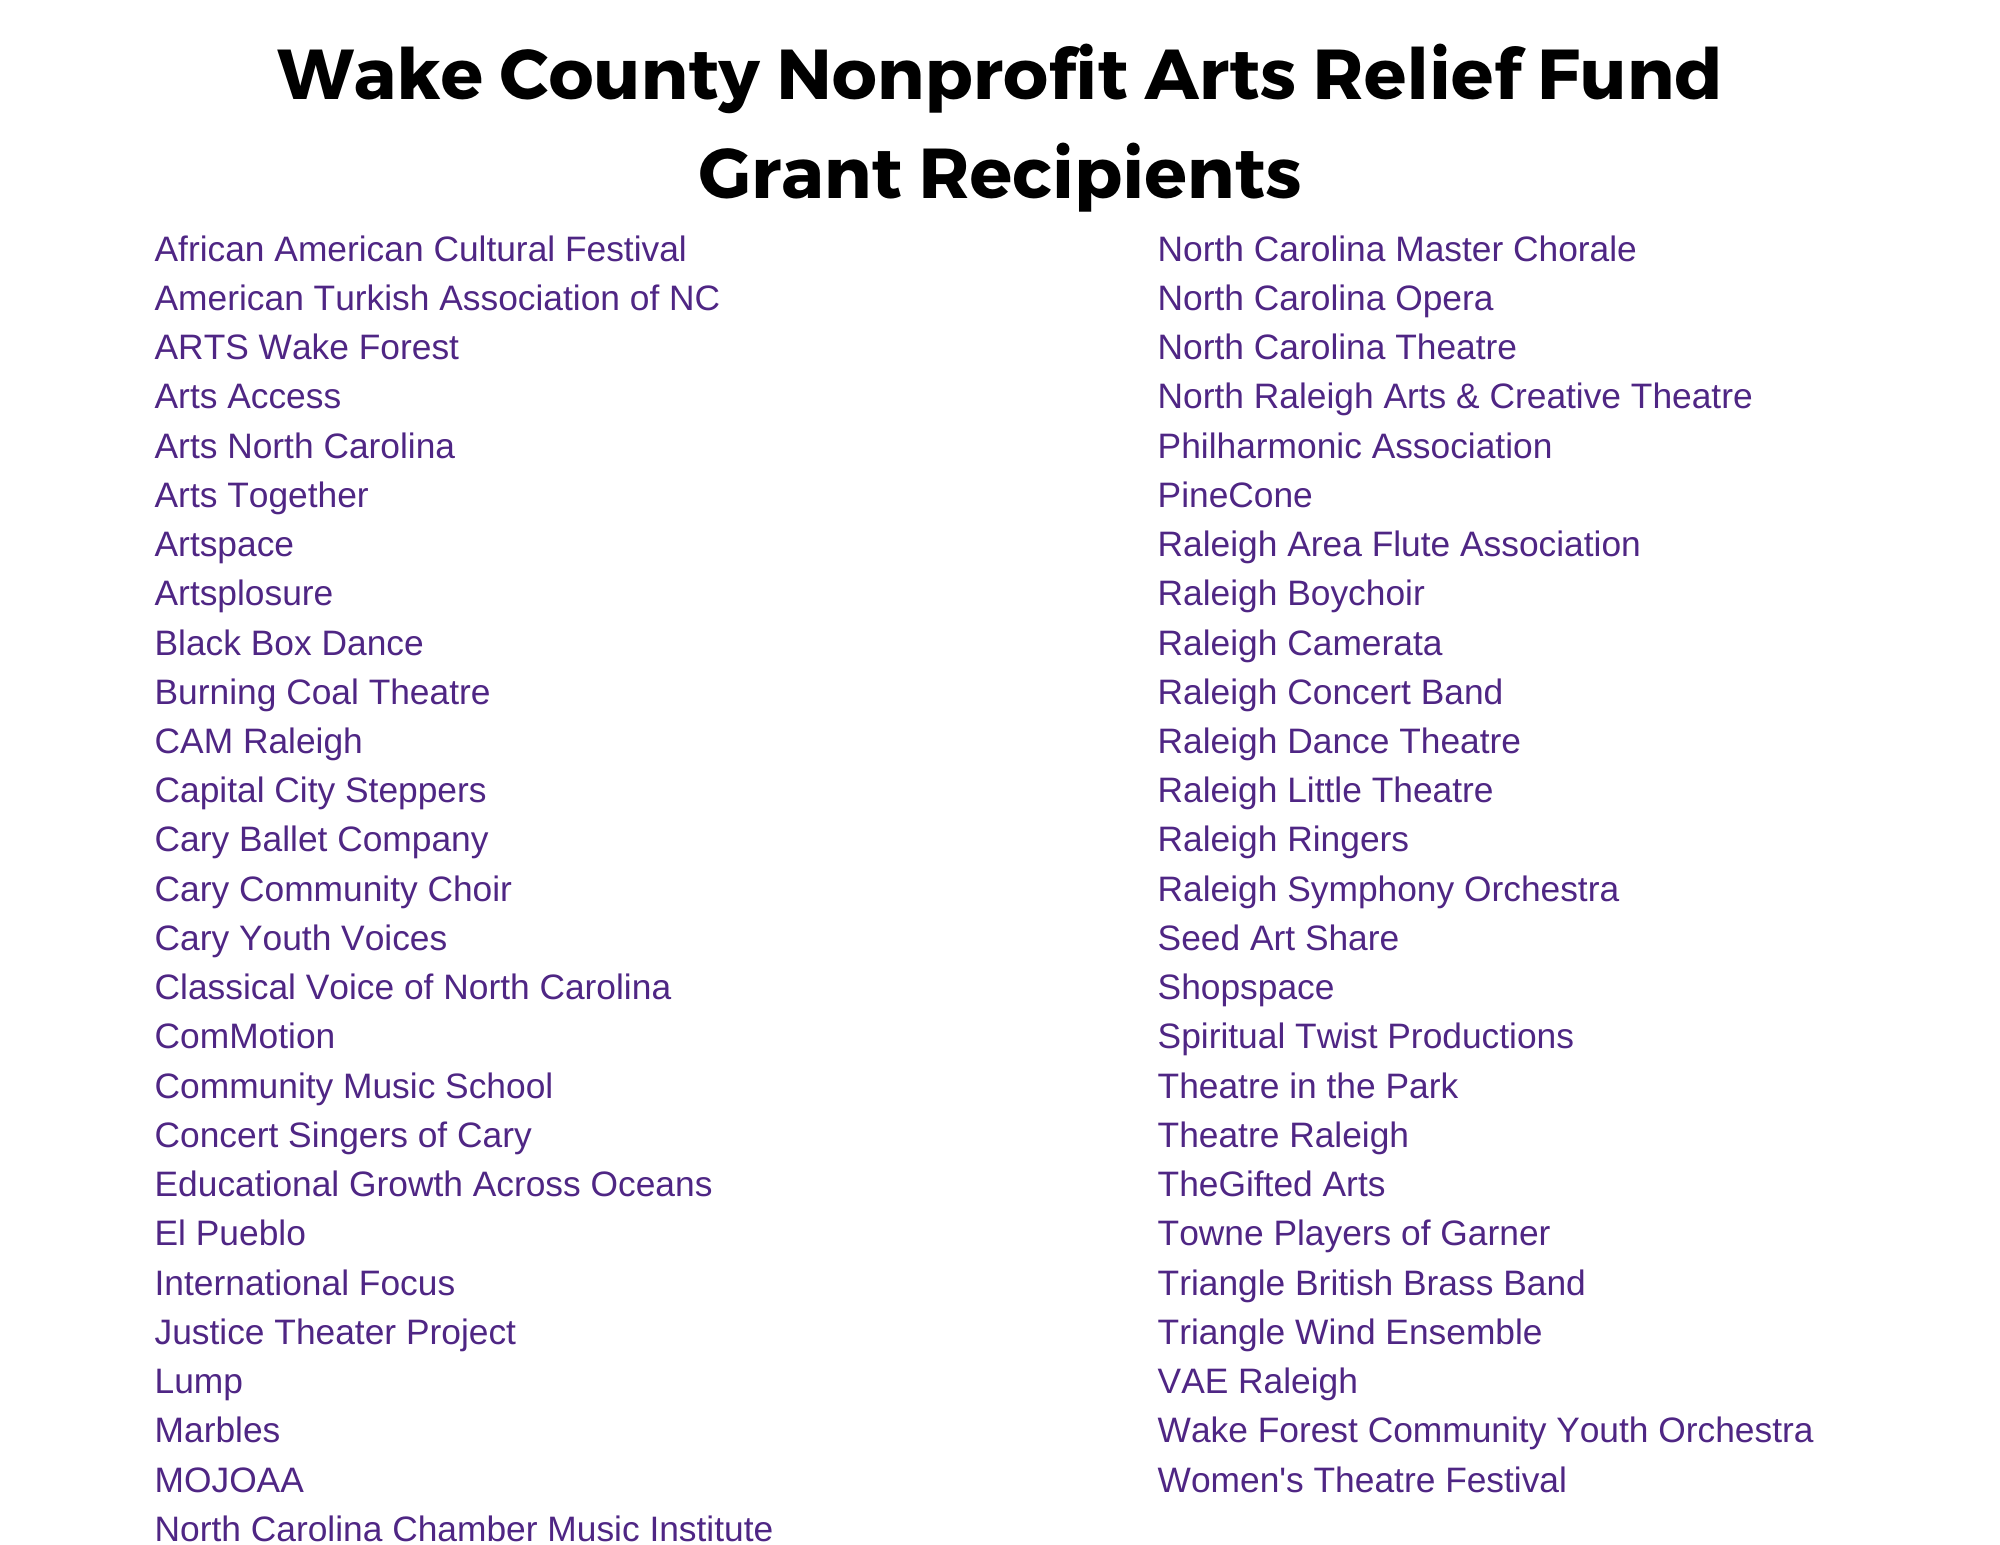 Wake County Nonprofit Arts Relief Fund Recipients